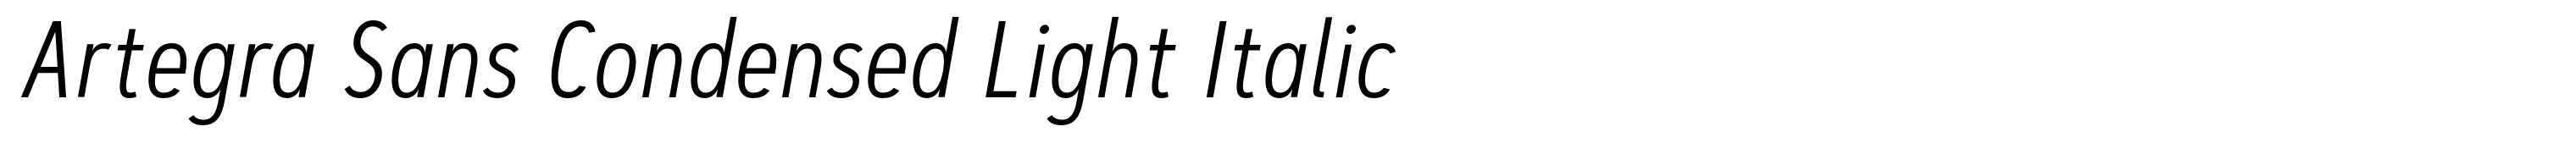 Artegra Sans Condensed Light Italic